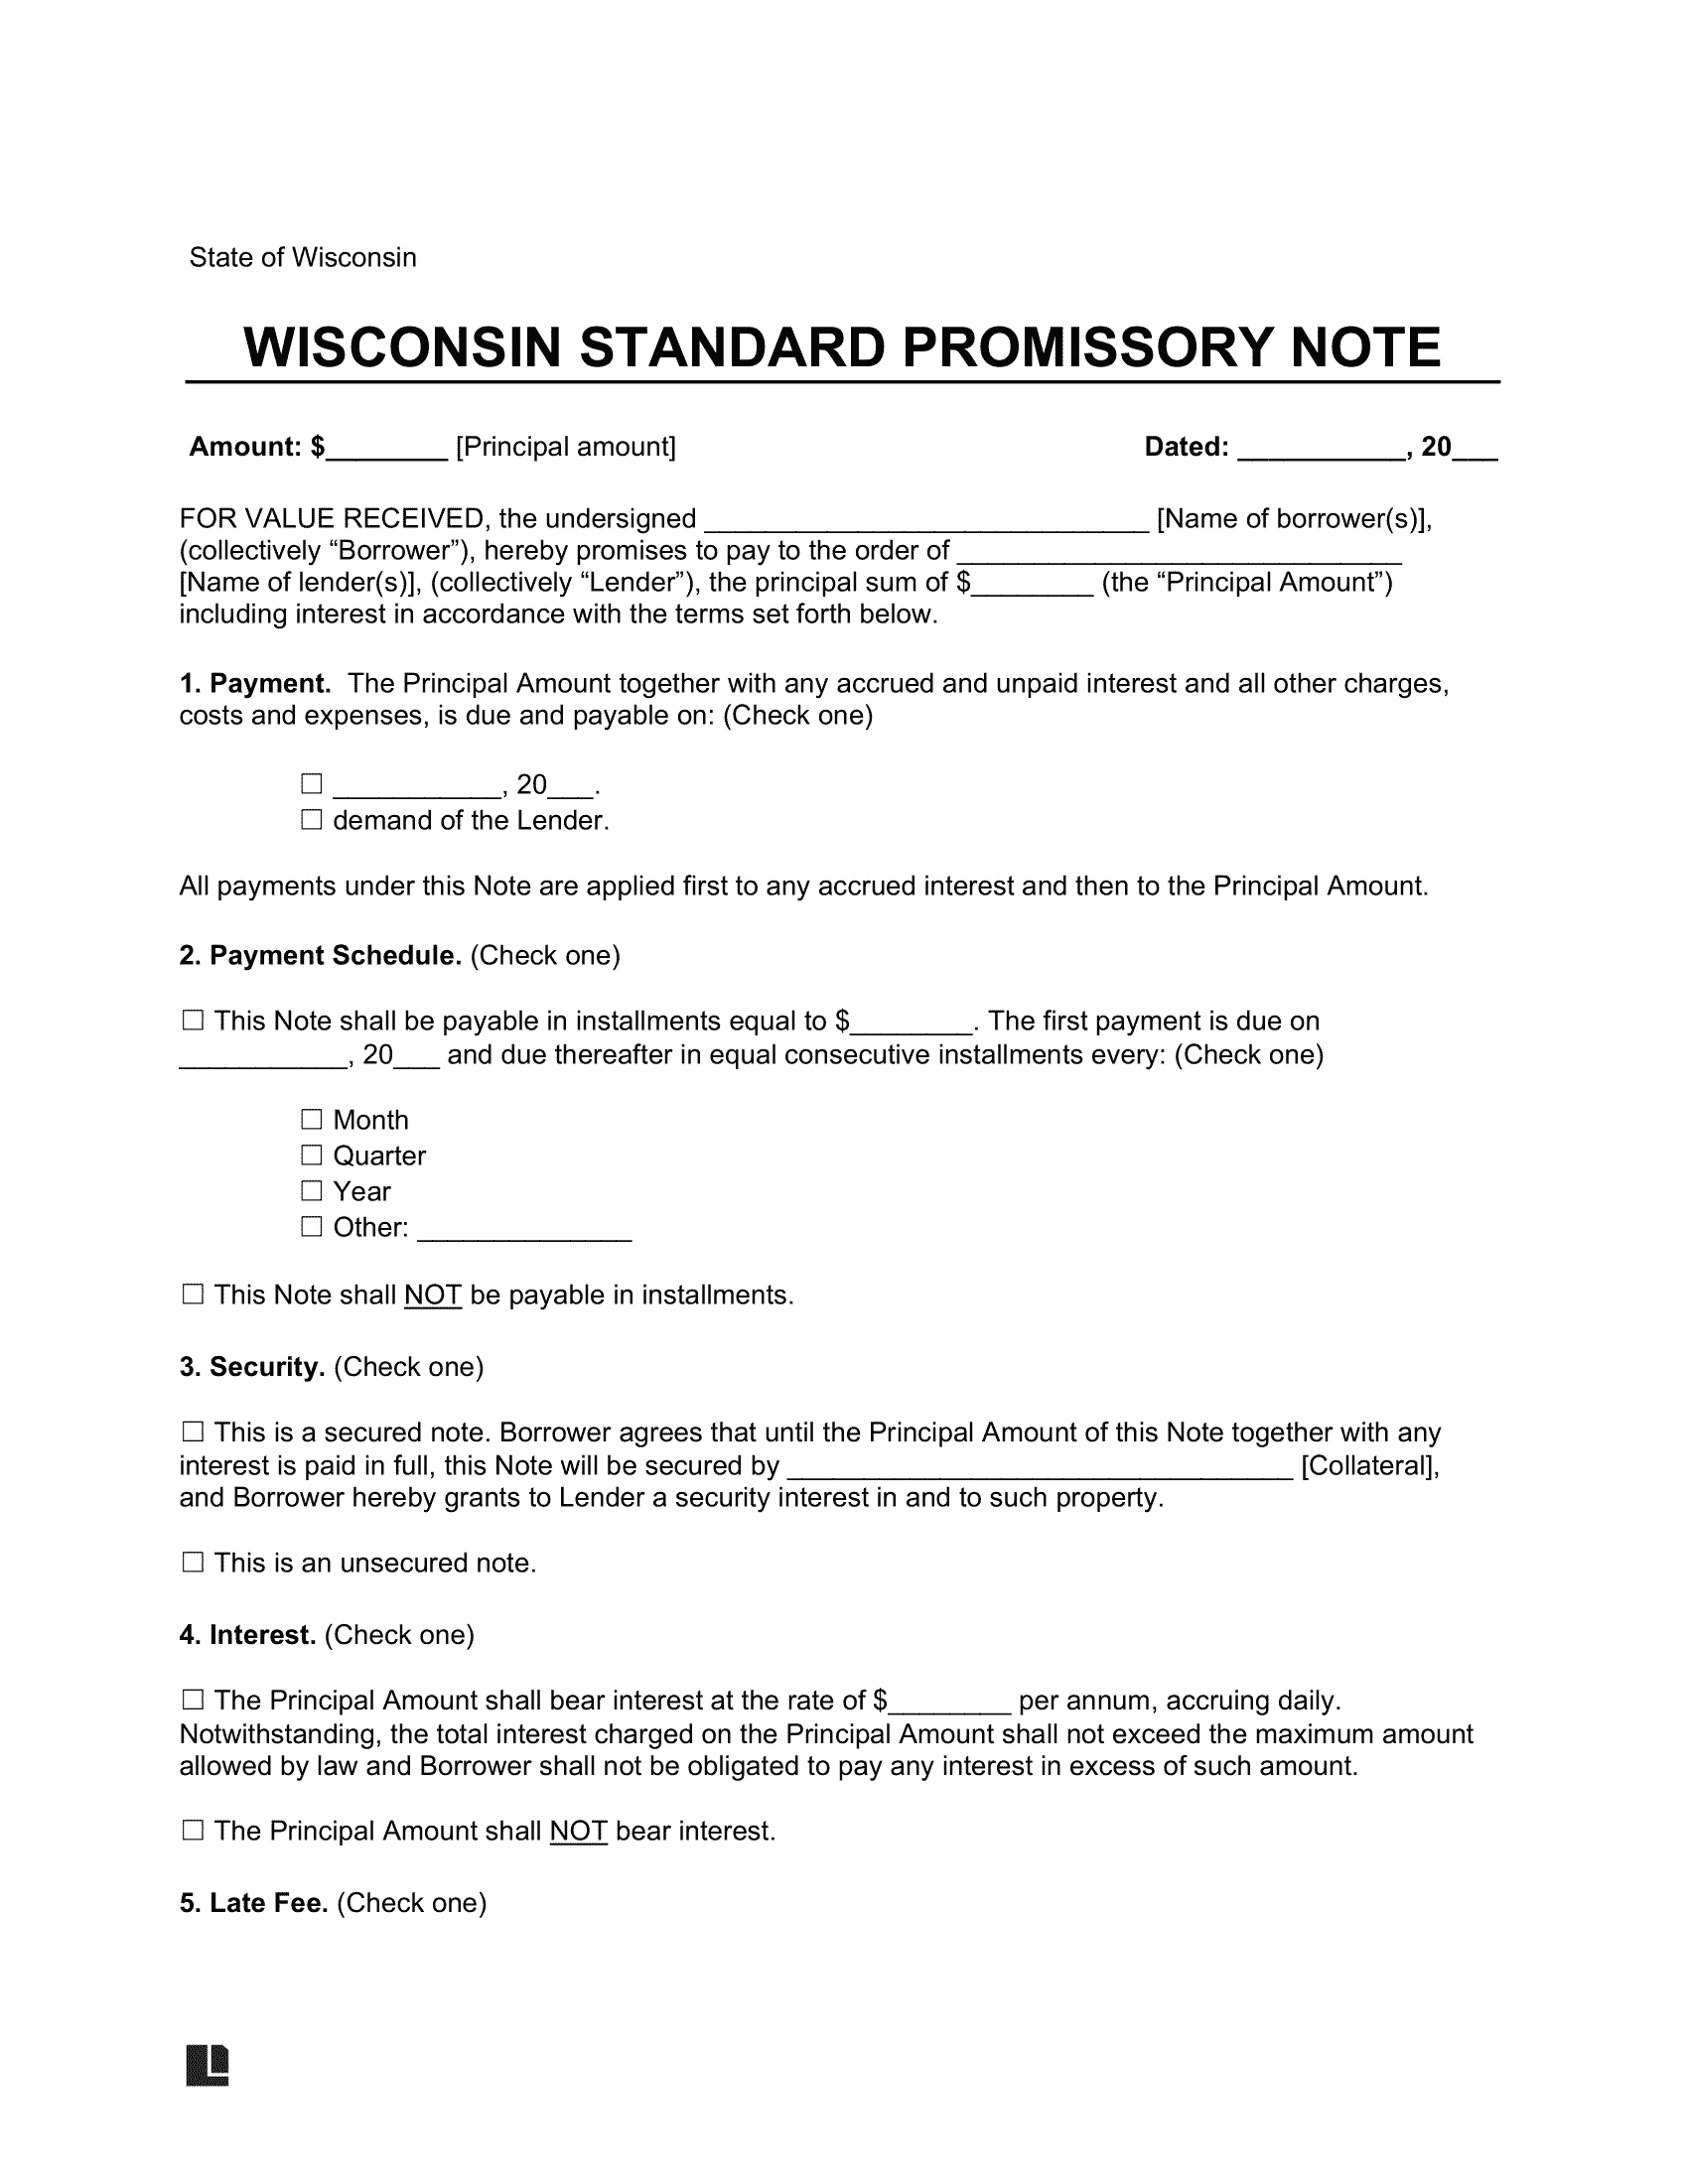 Wisconsin Standard Promissory Note Template